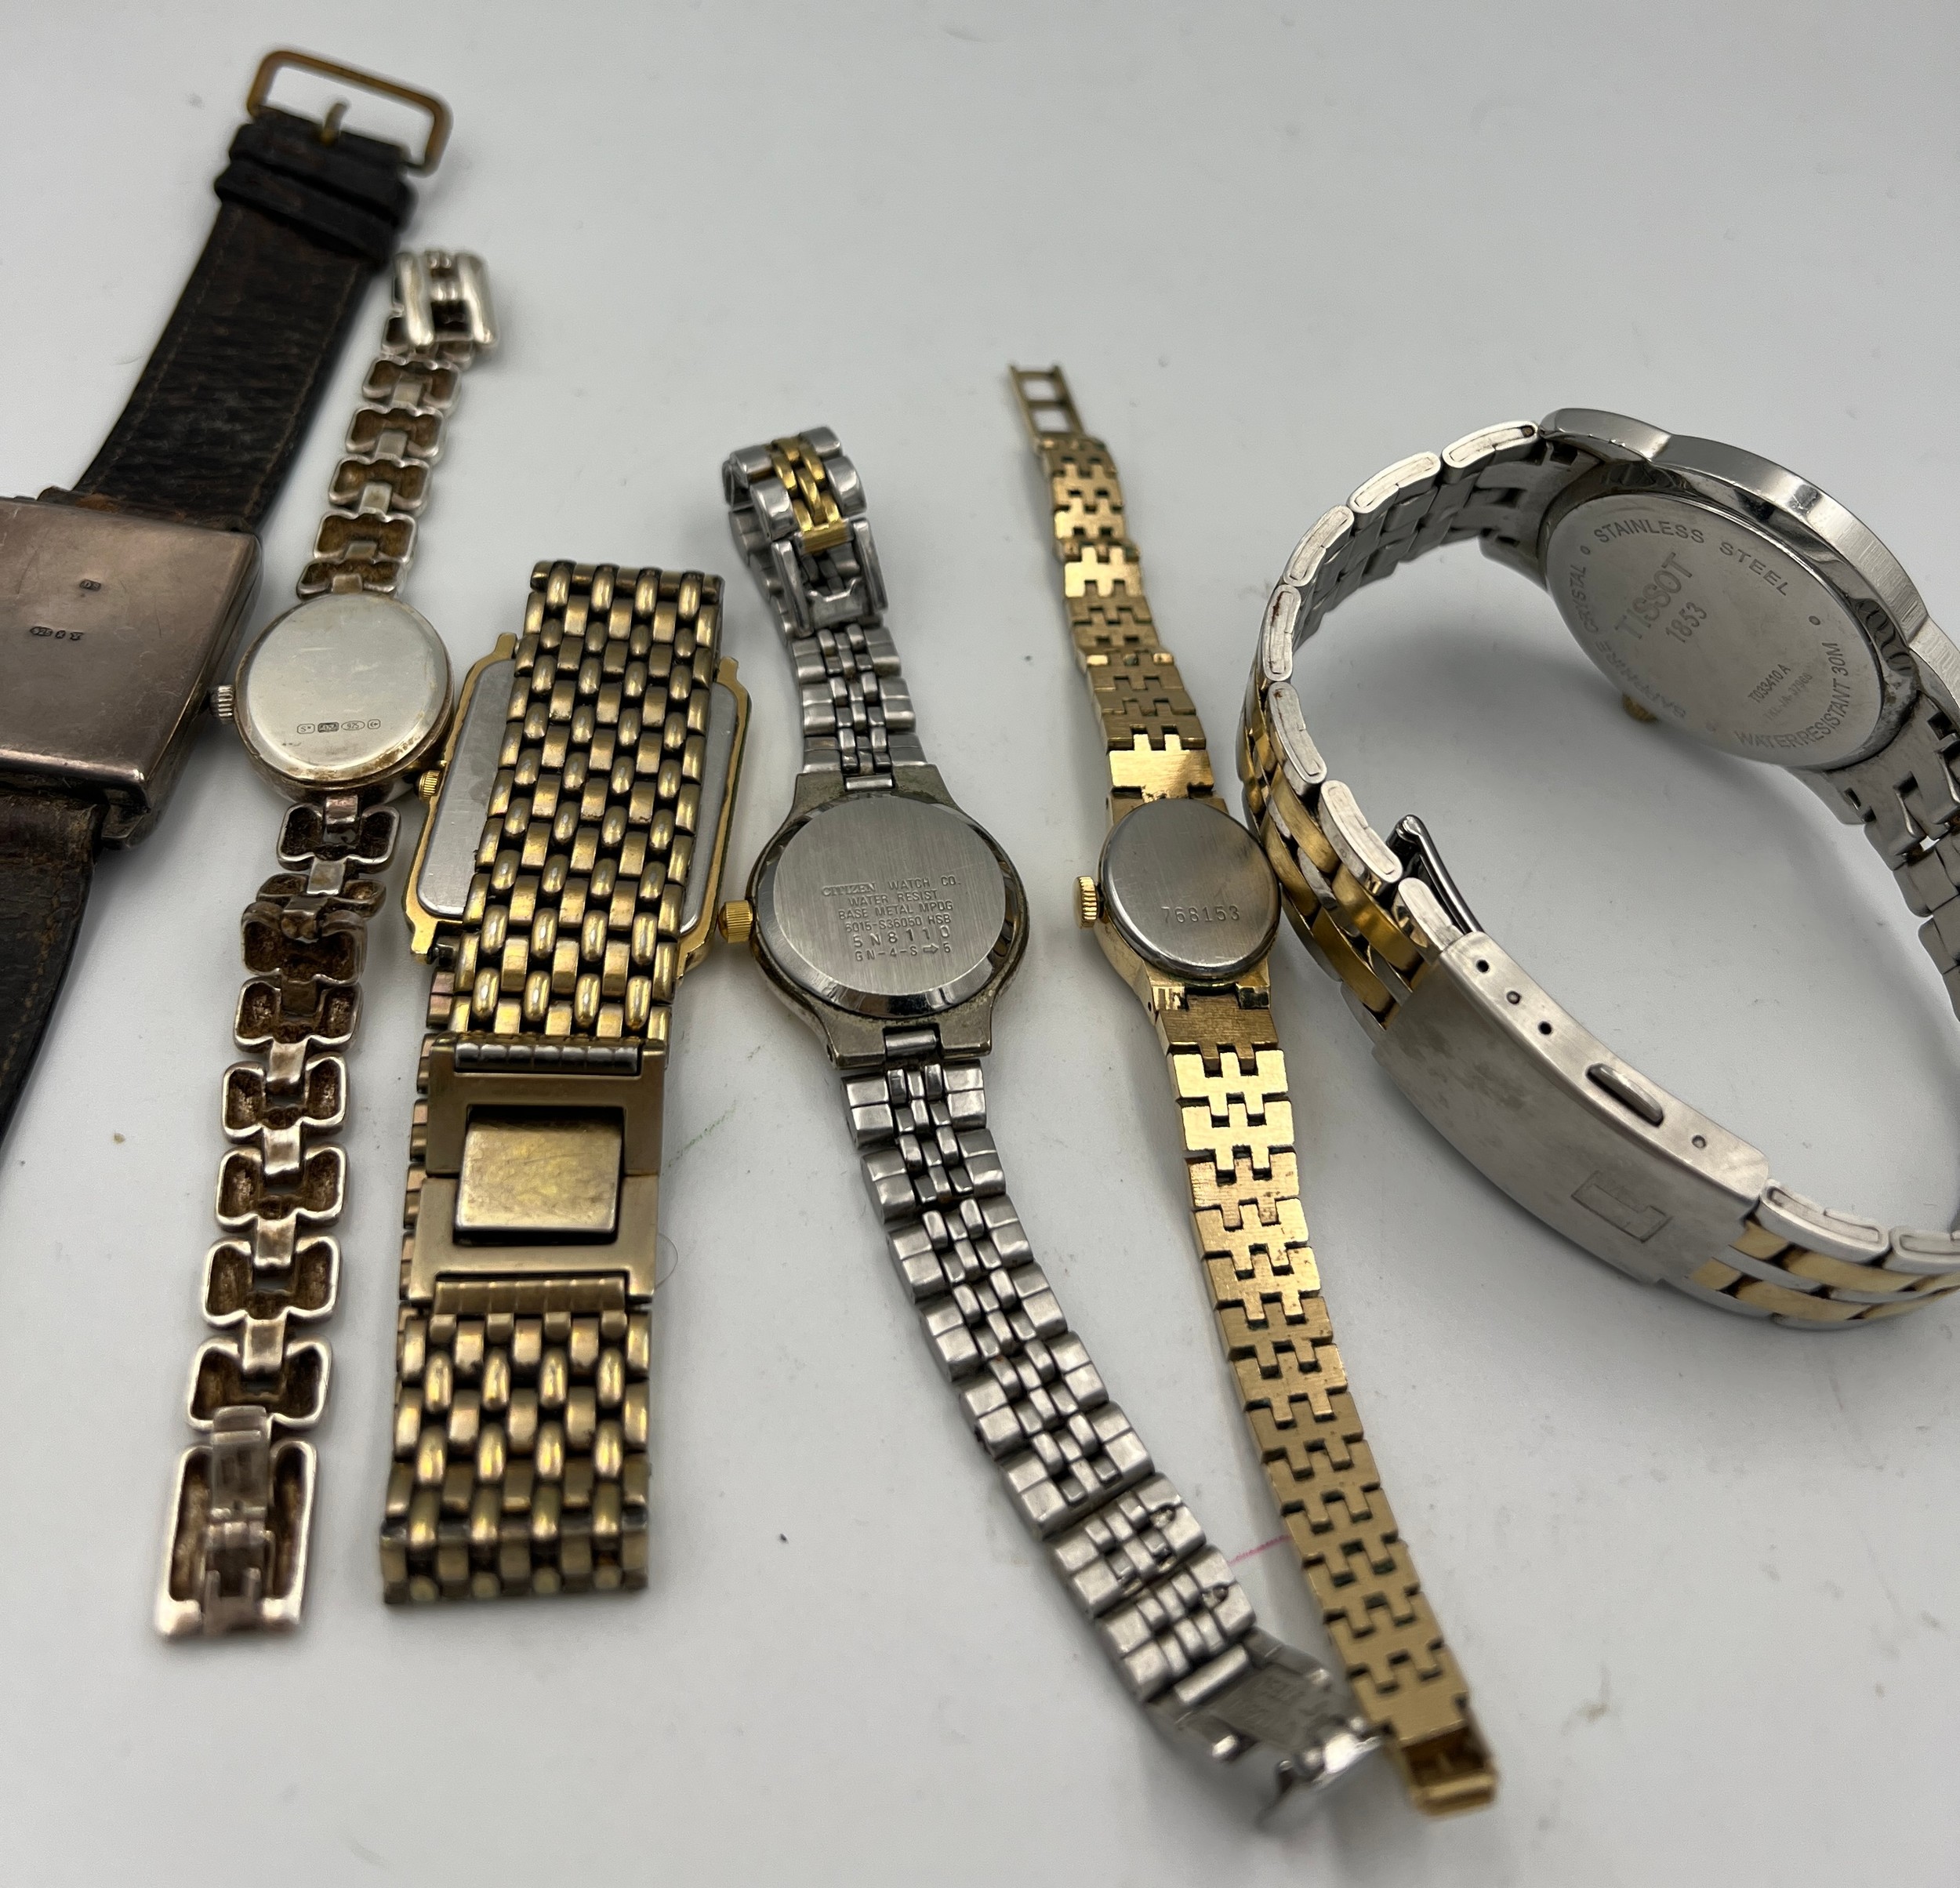 Six various gentlemen’s and ladies wristwatches to include Tissot 1853, Seiko quartz, Sekonda, - Image 2 of 2